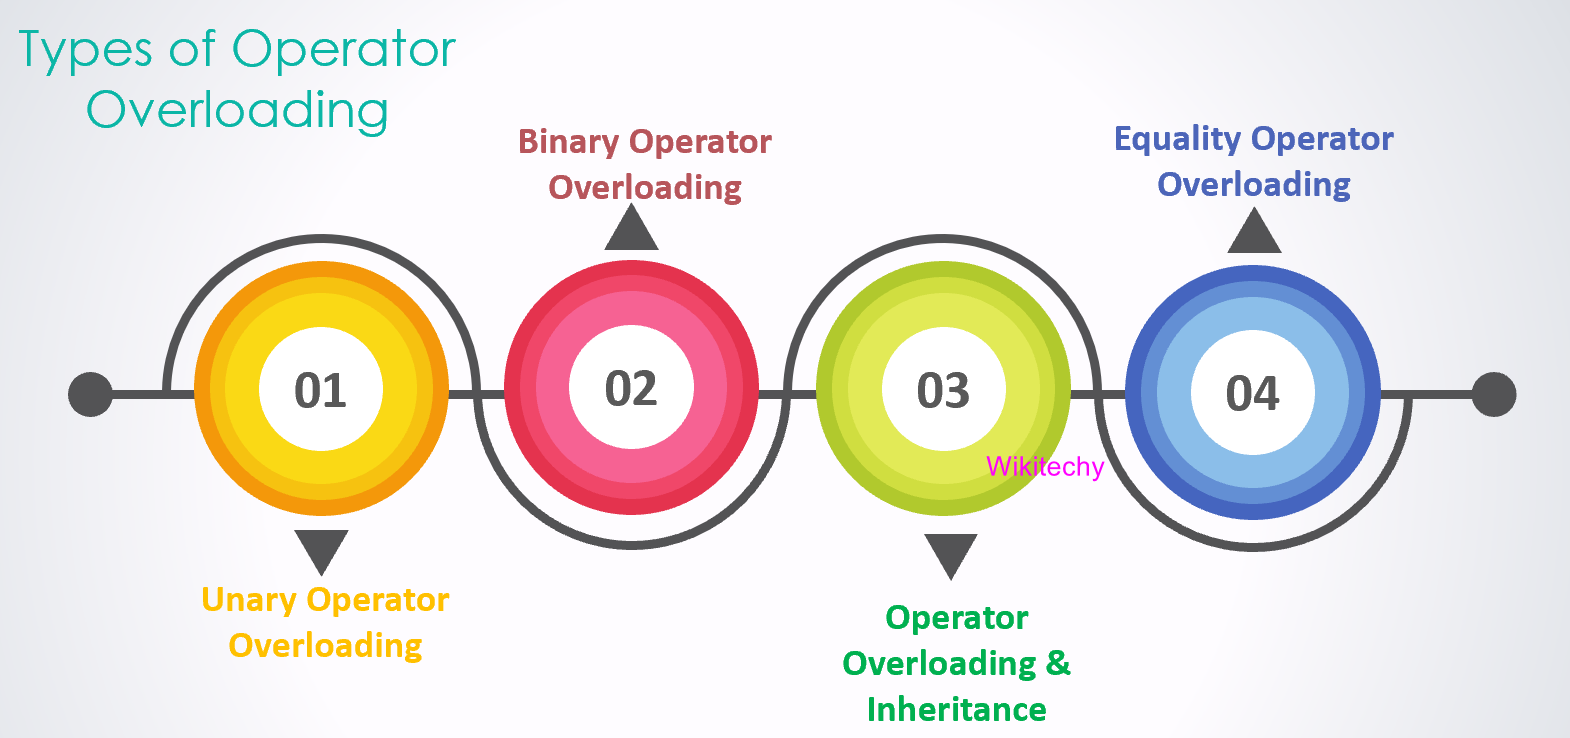 Types of Operator Overloading